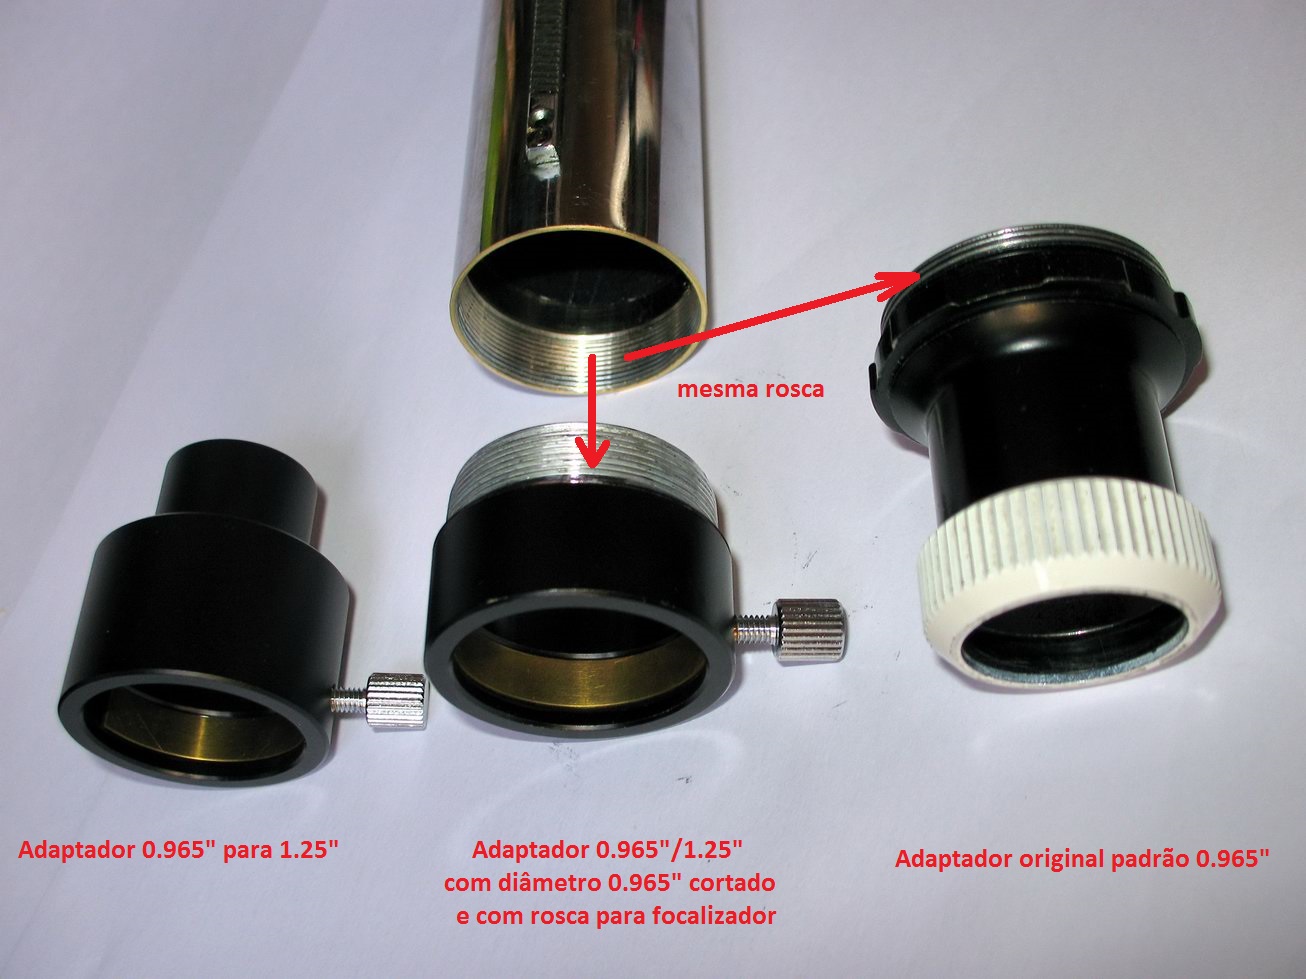 1.25" adapter for vintage refractors